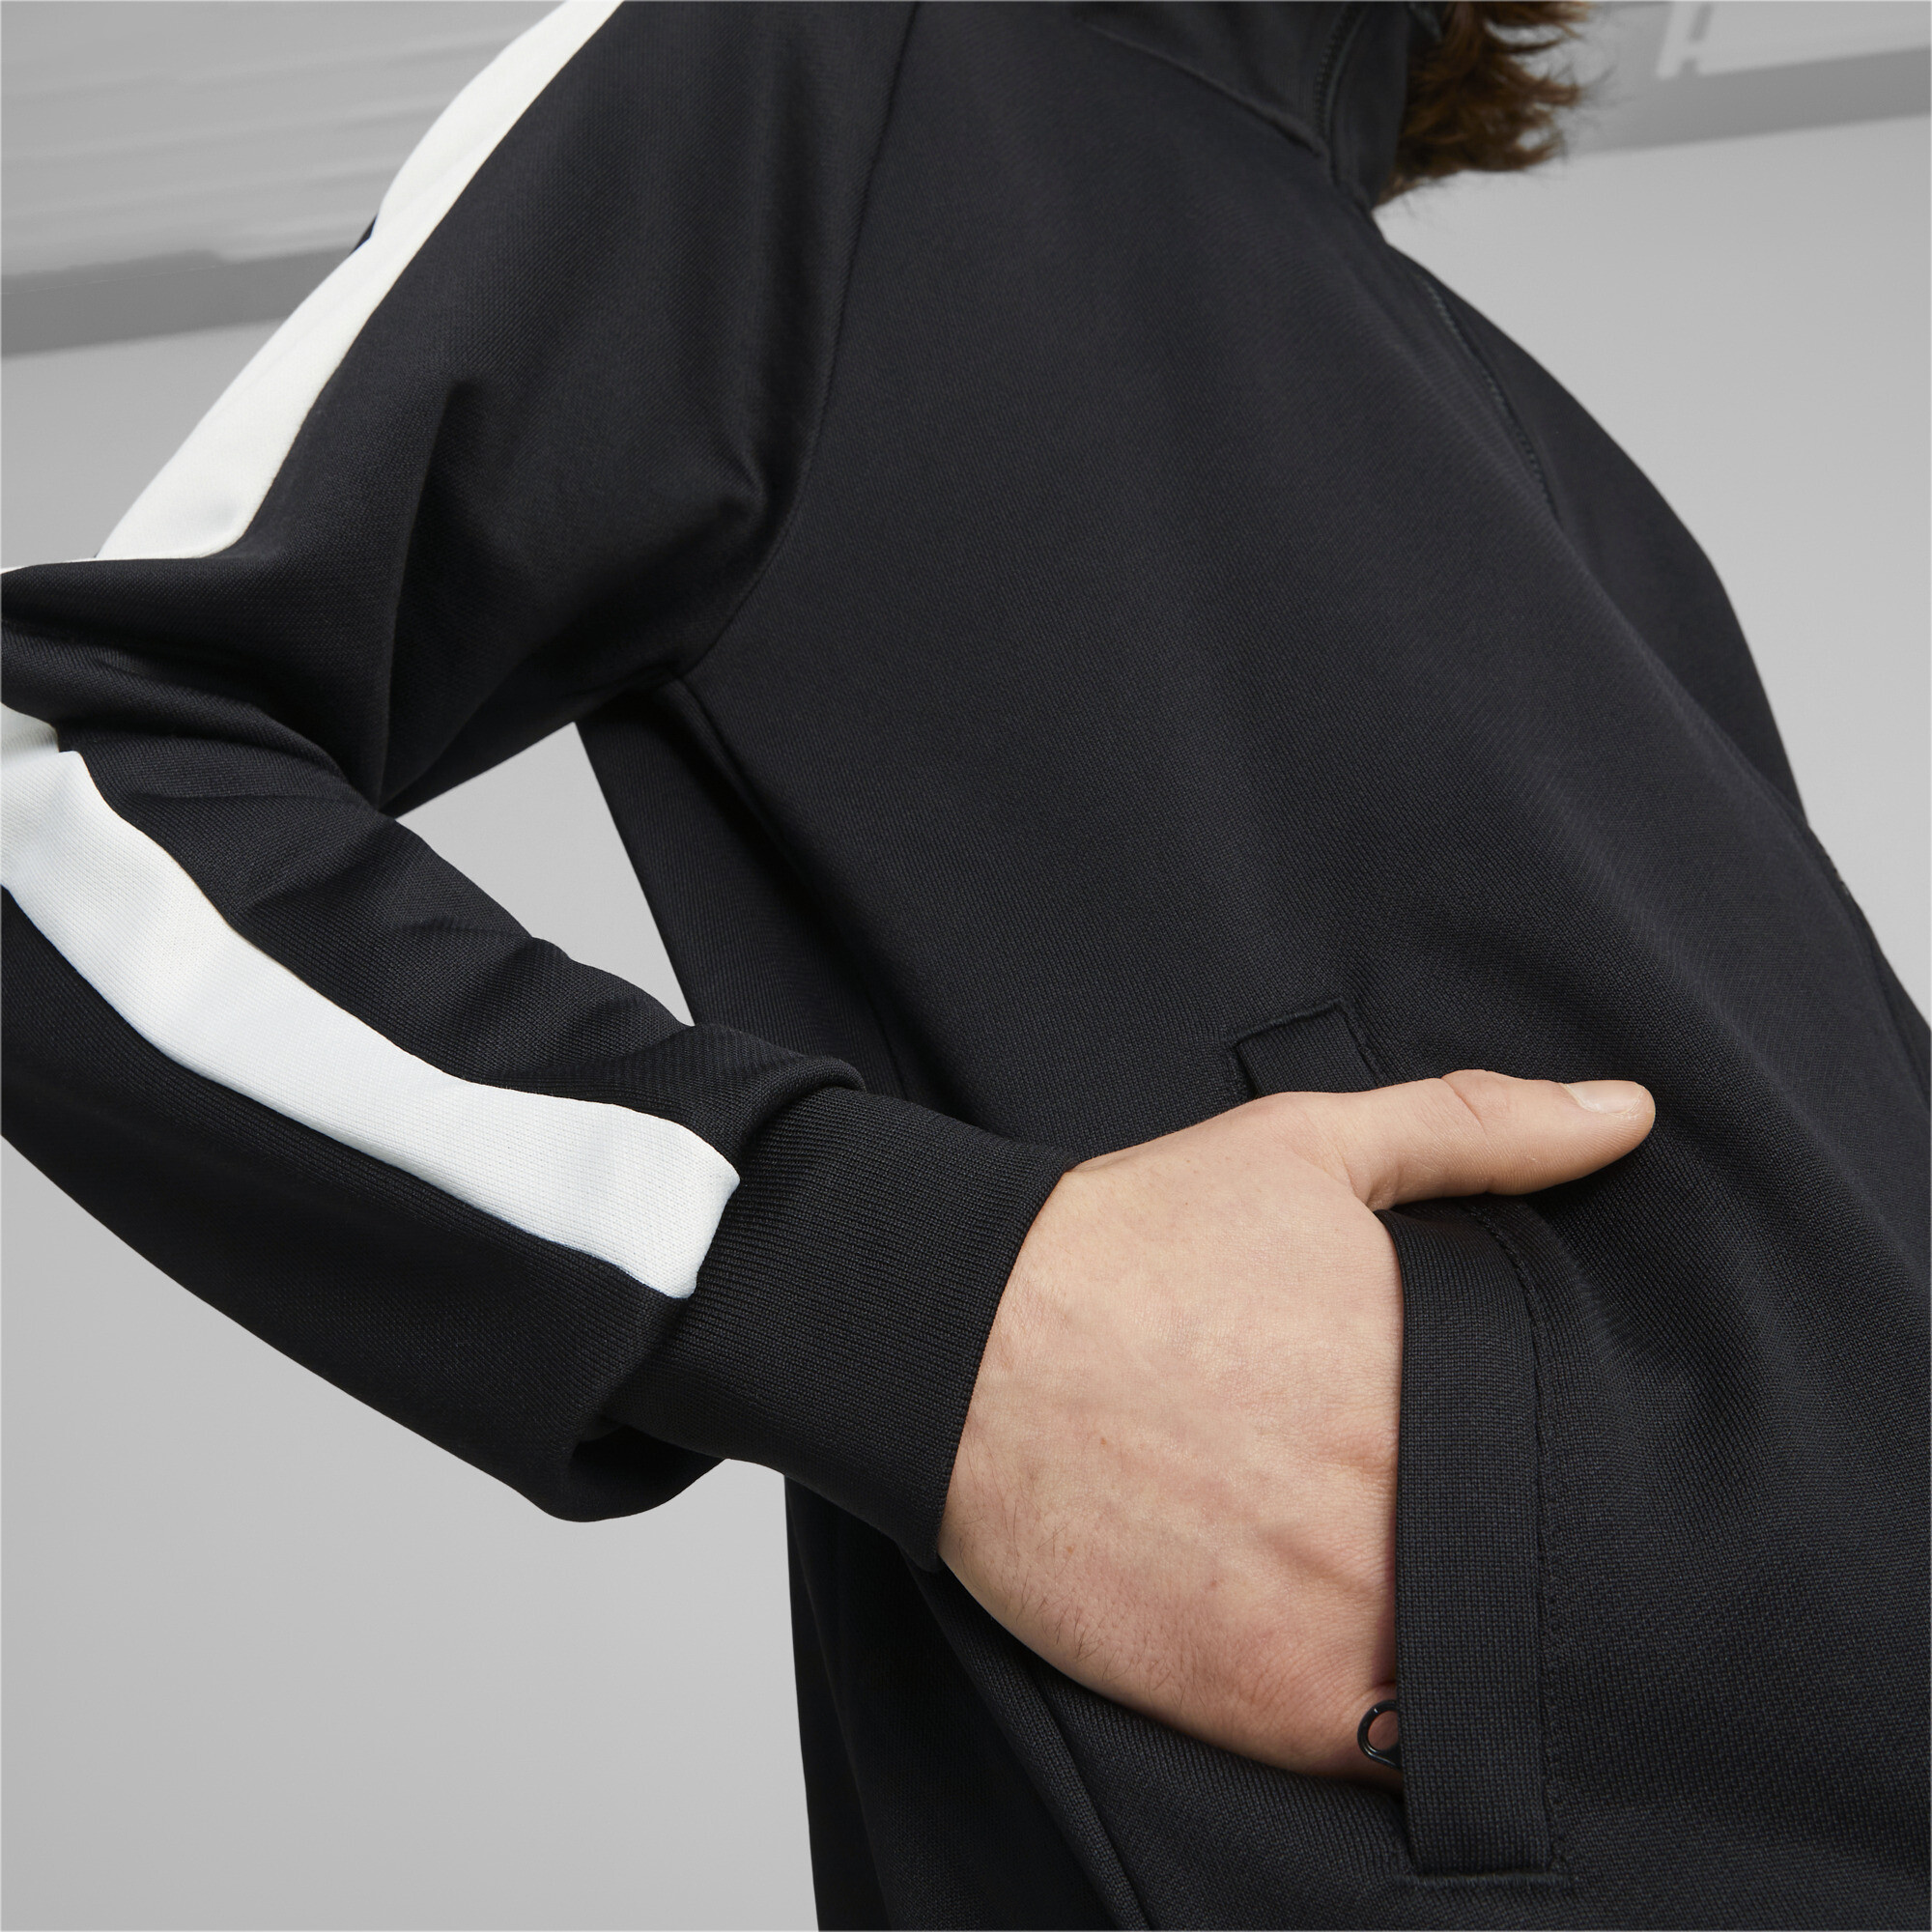 Men's PUMA Iconic T7 Track Jacket In 10 - Black, Size Large